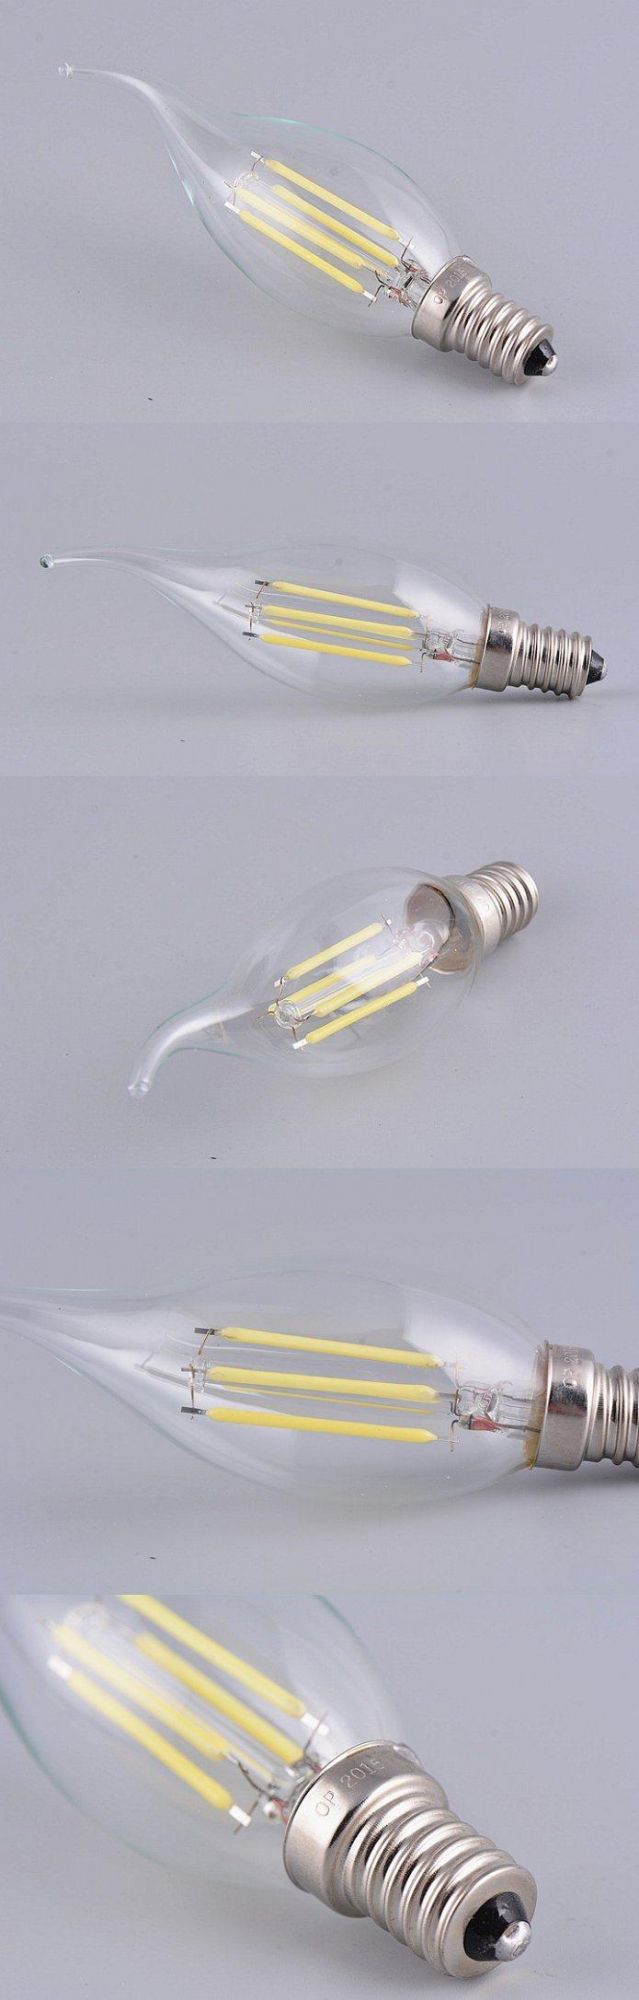 China Product Cheap Price 5W 10W 15W E27 Tubular Incandescent Bulb